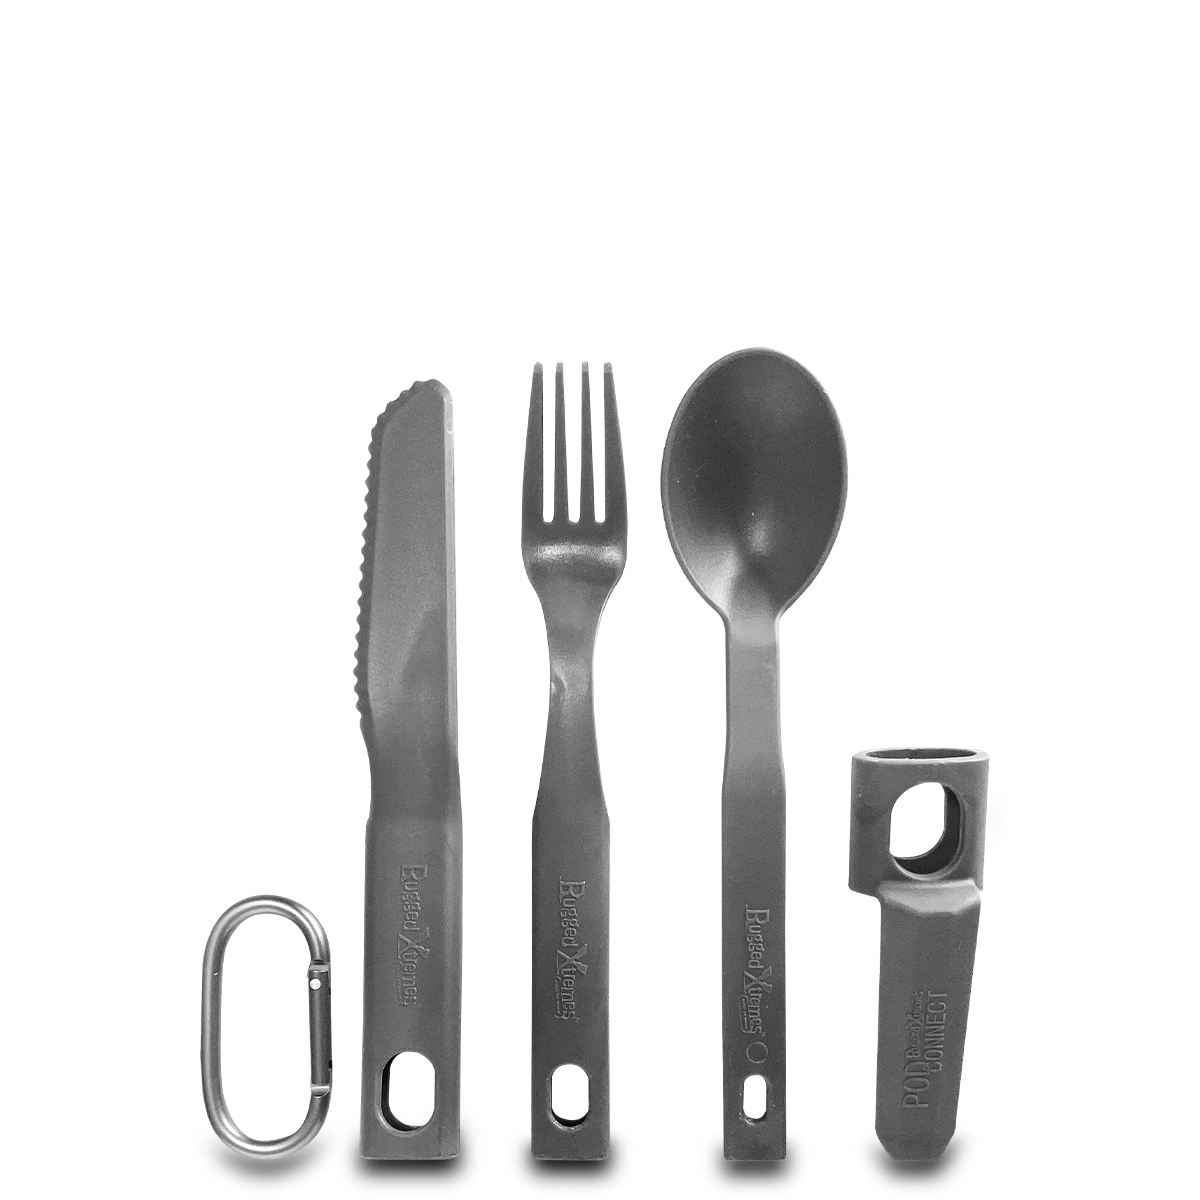 Reusable composite cutlery set